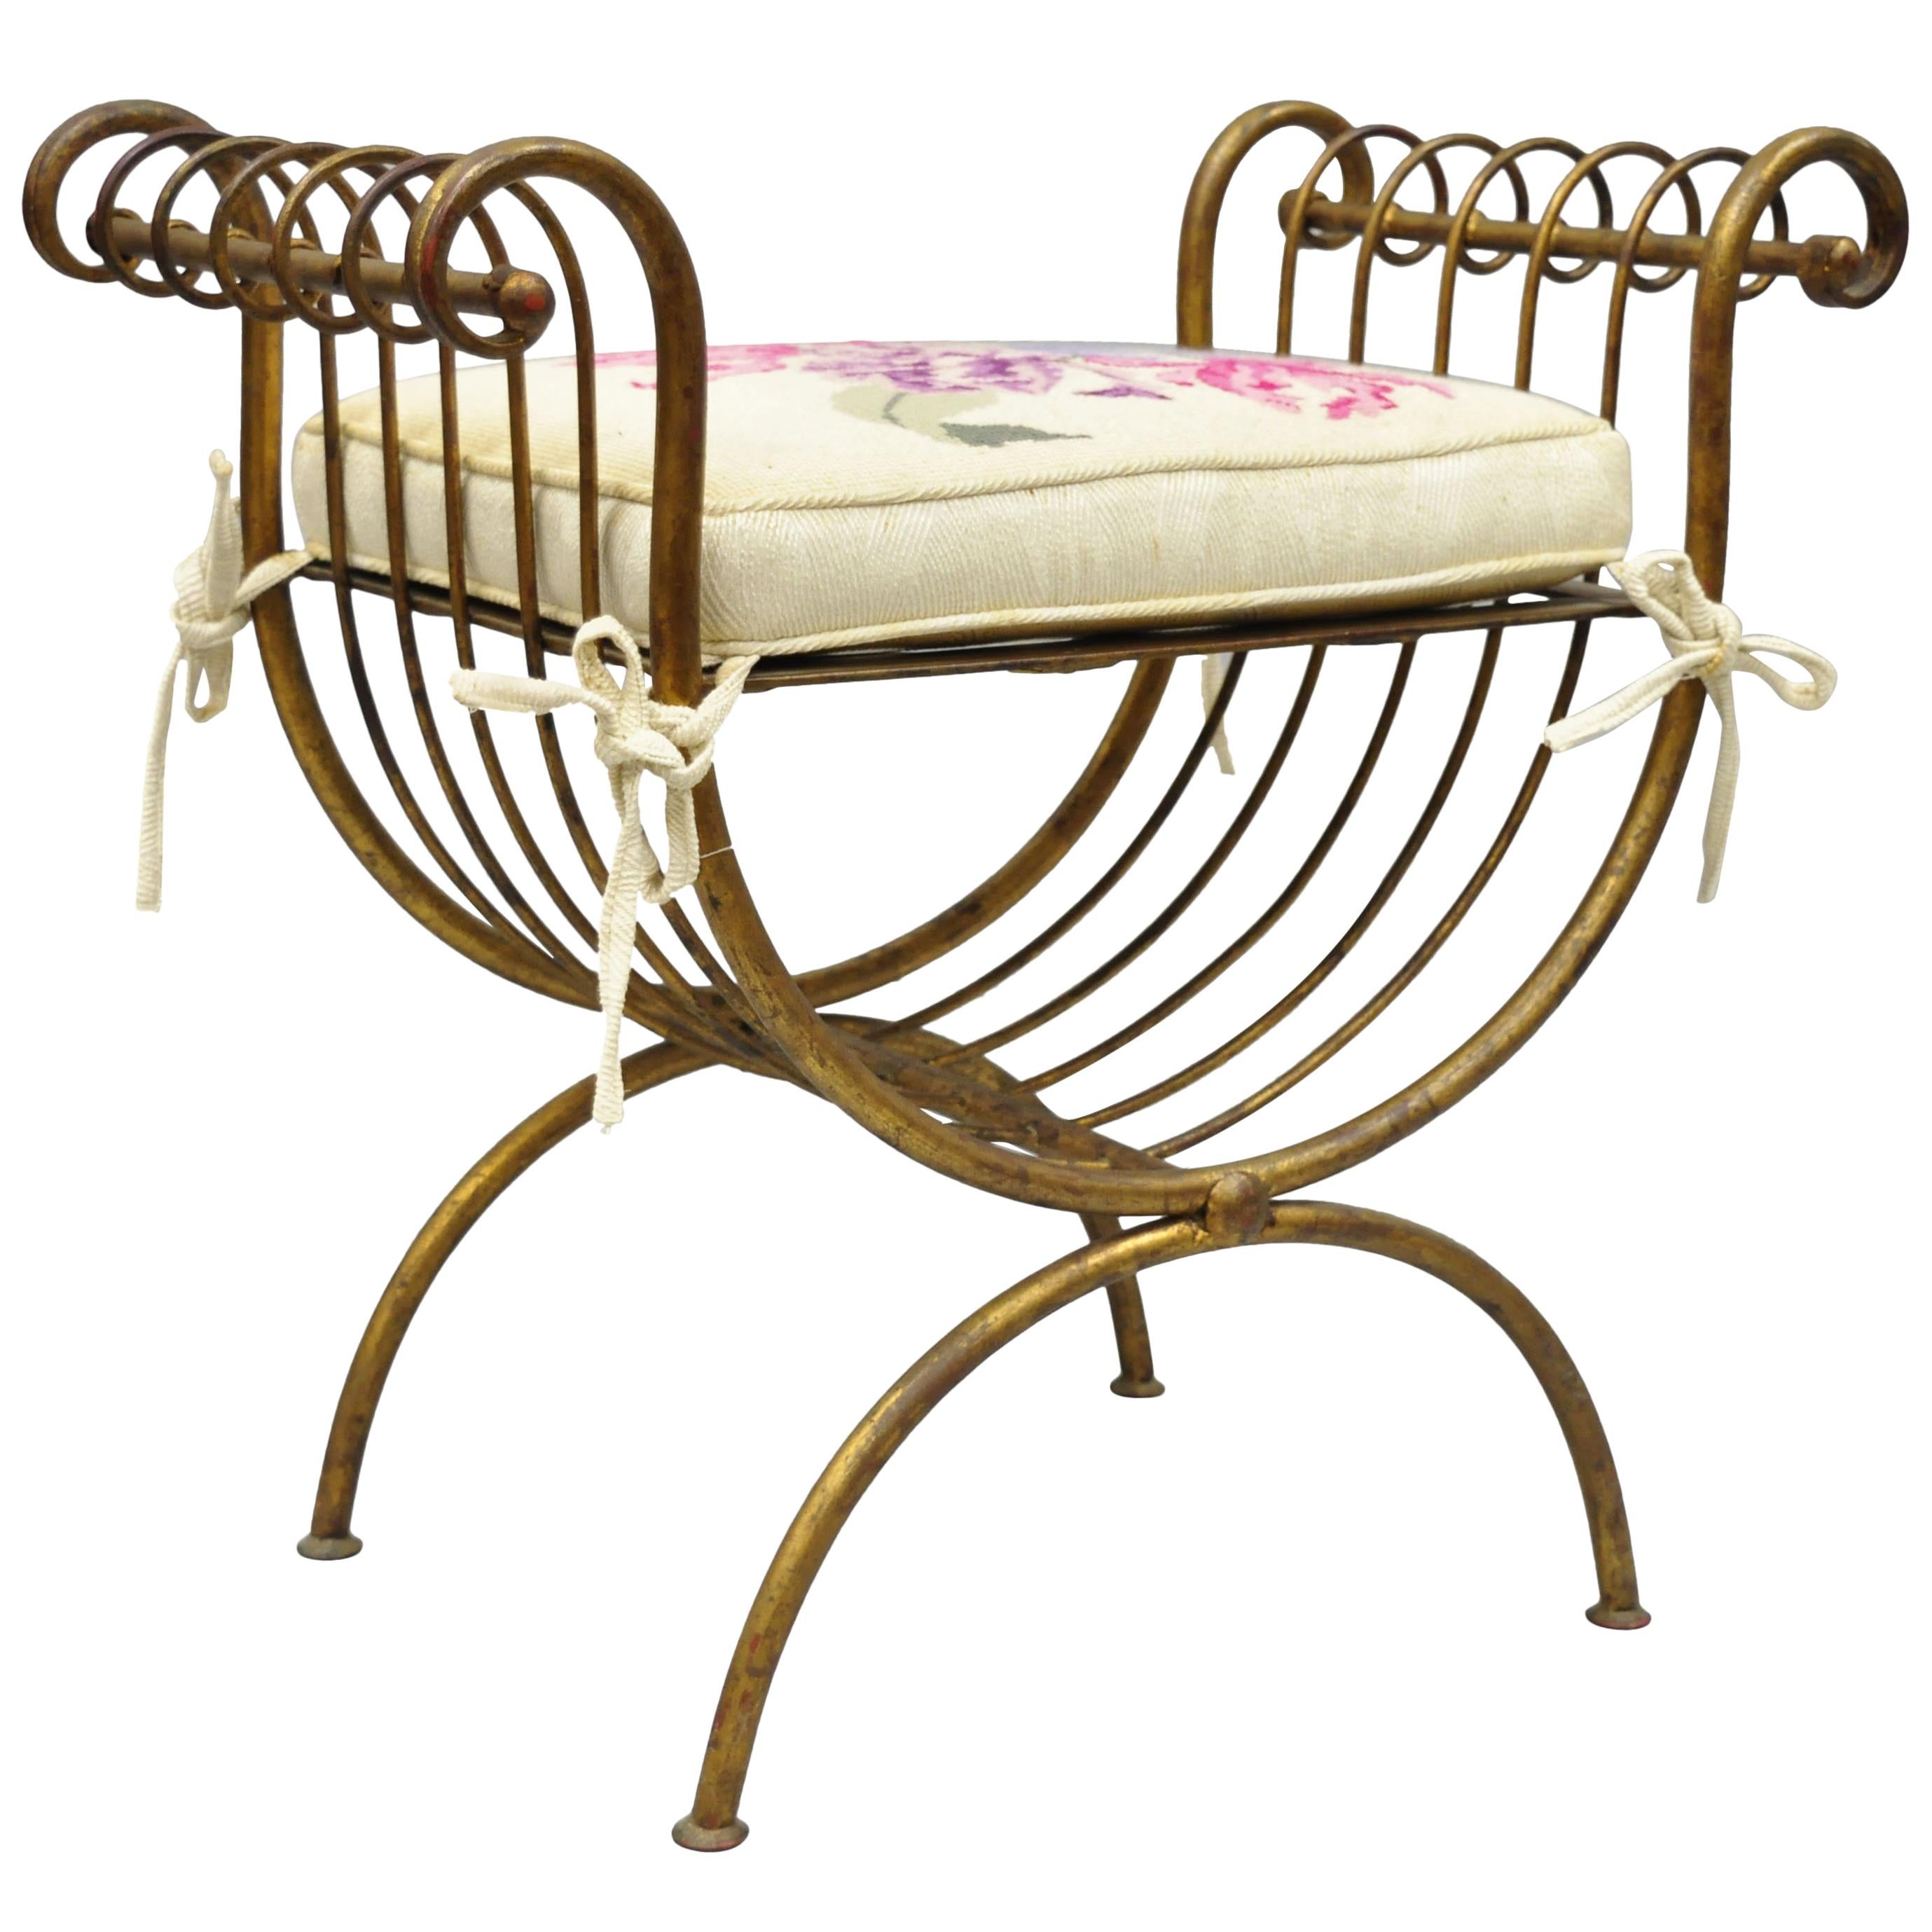 Vintage Italian Hollywood Regency Iron Gold Gilt Curule Vanity Bench Seat Chair